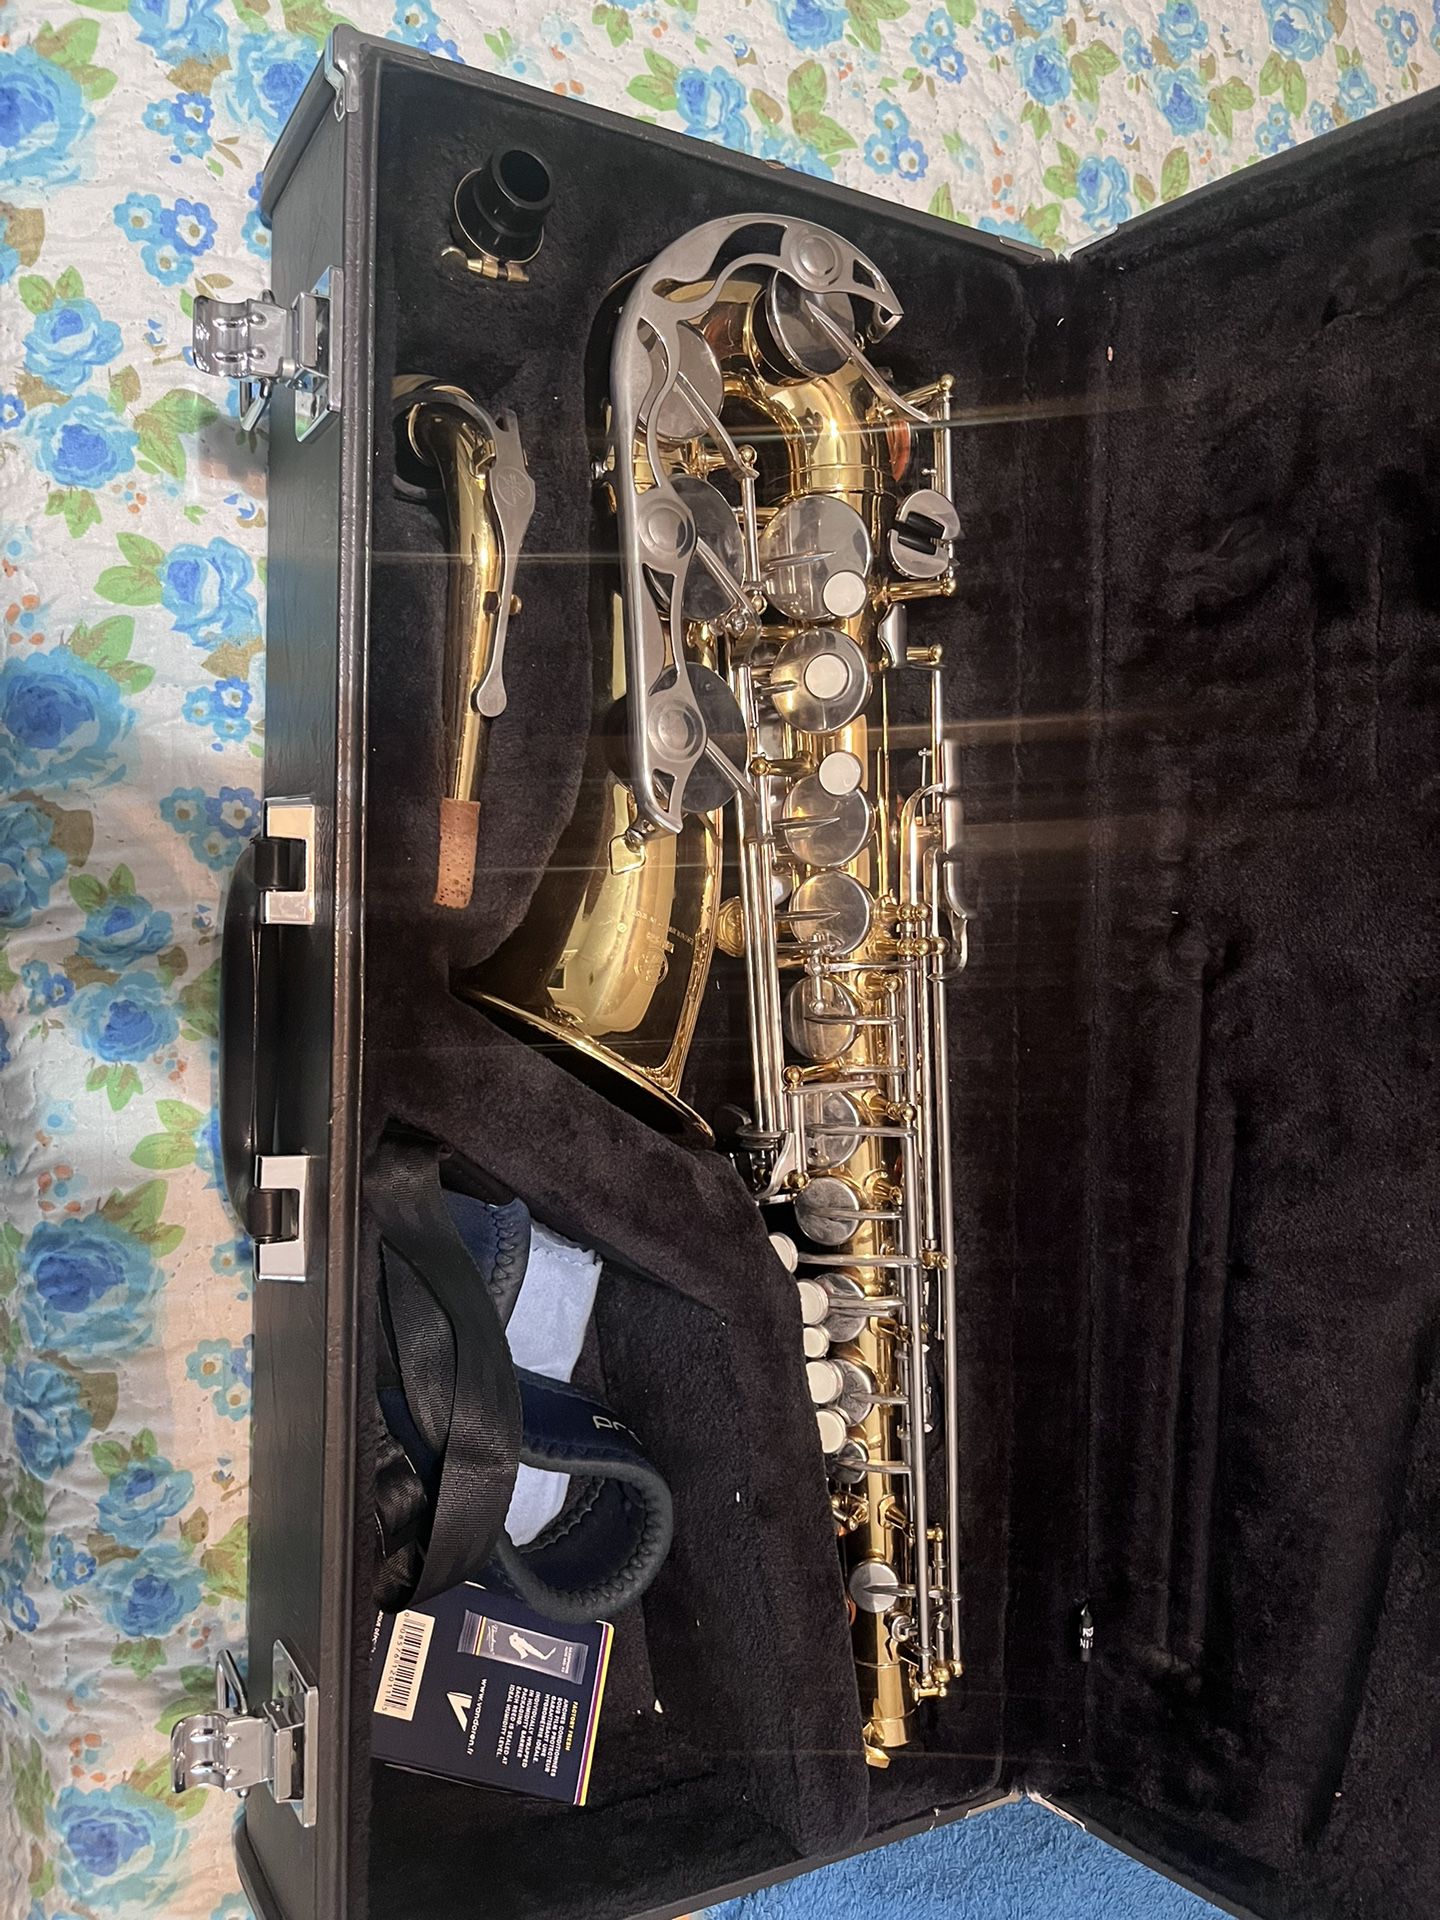 Yamaha Saxophone 